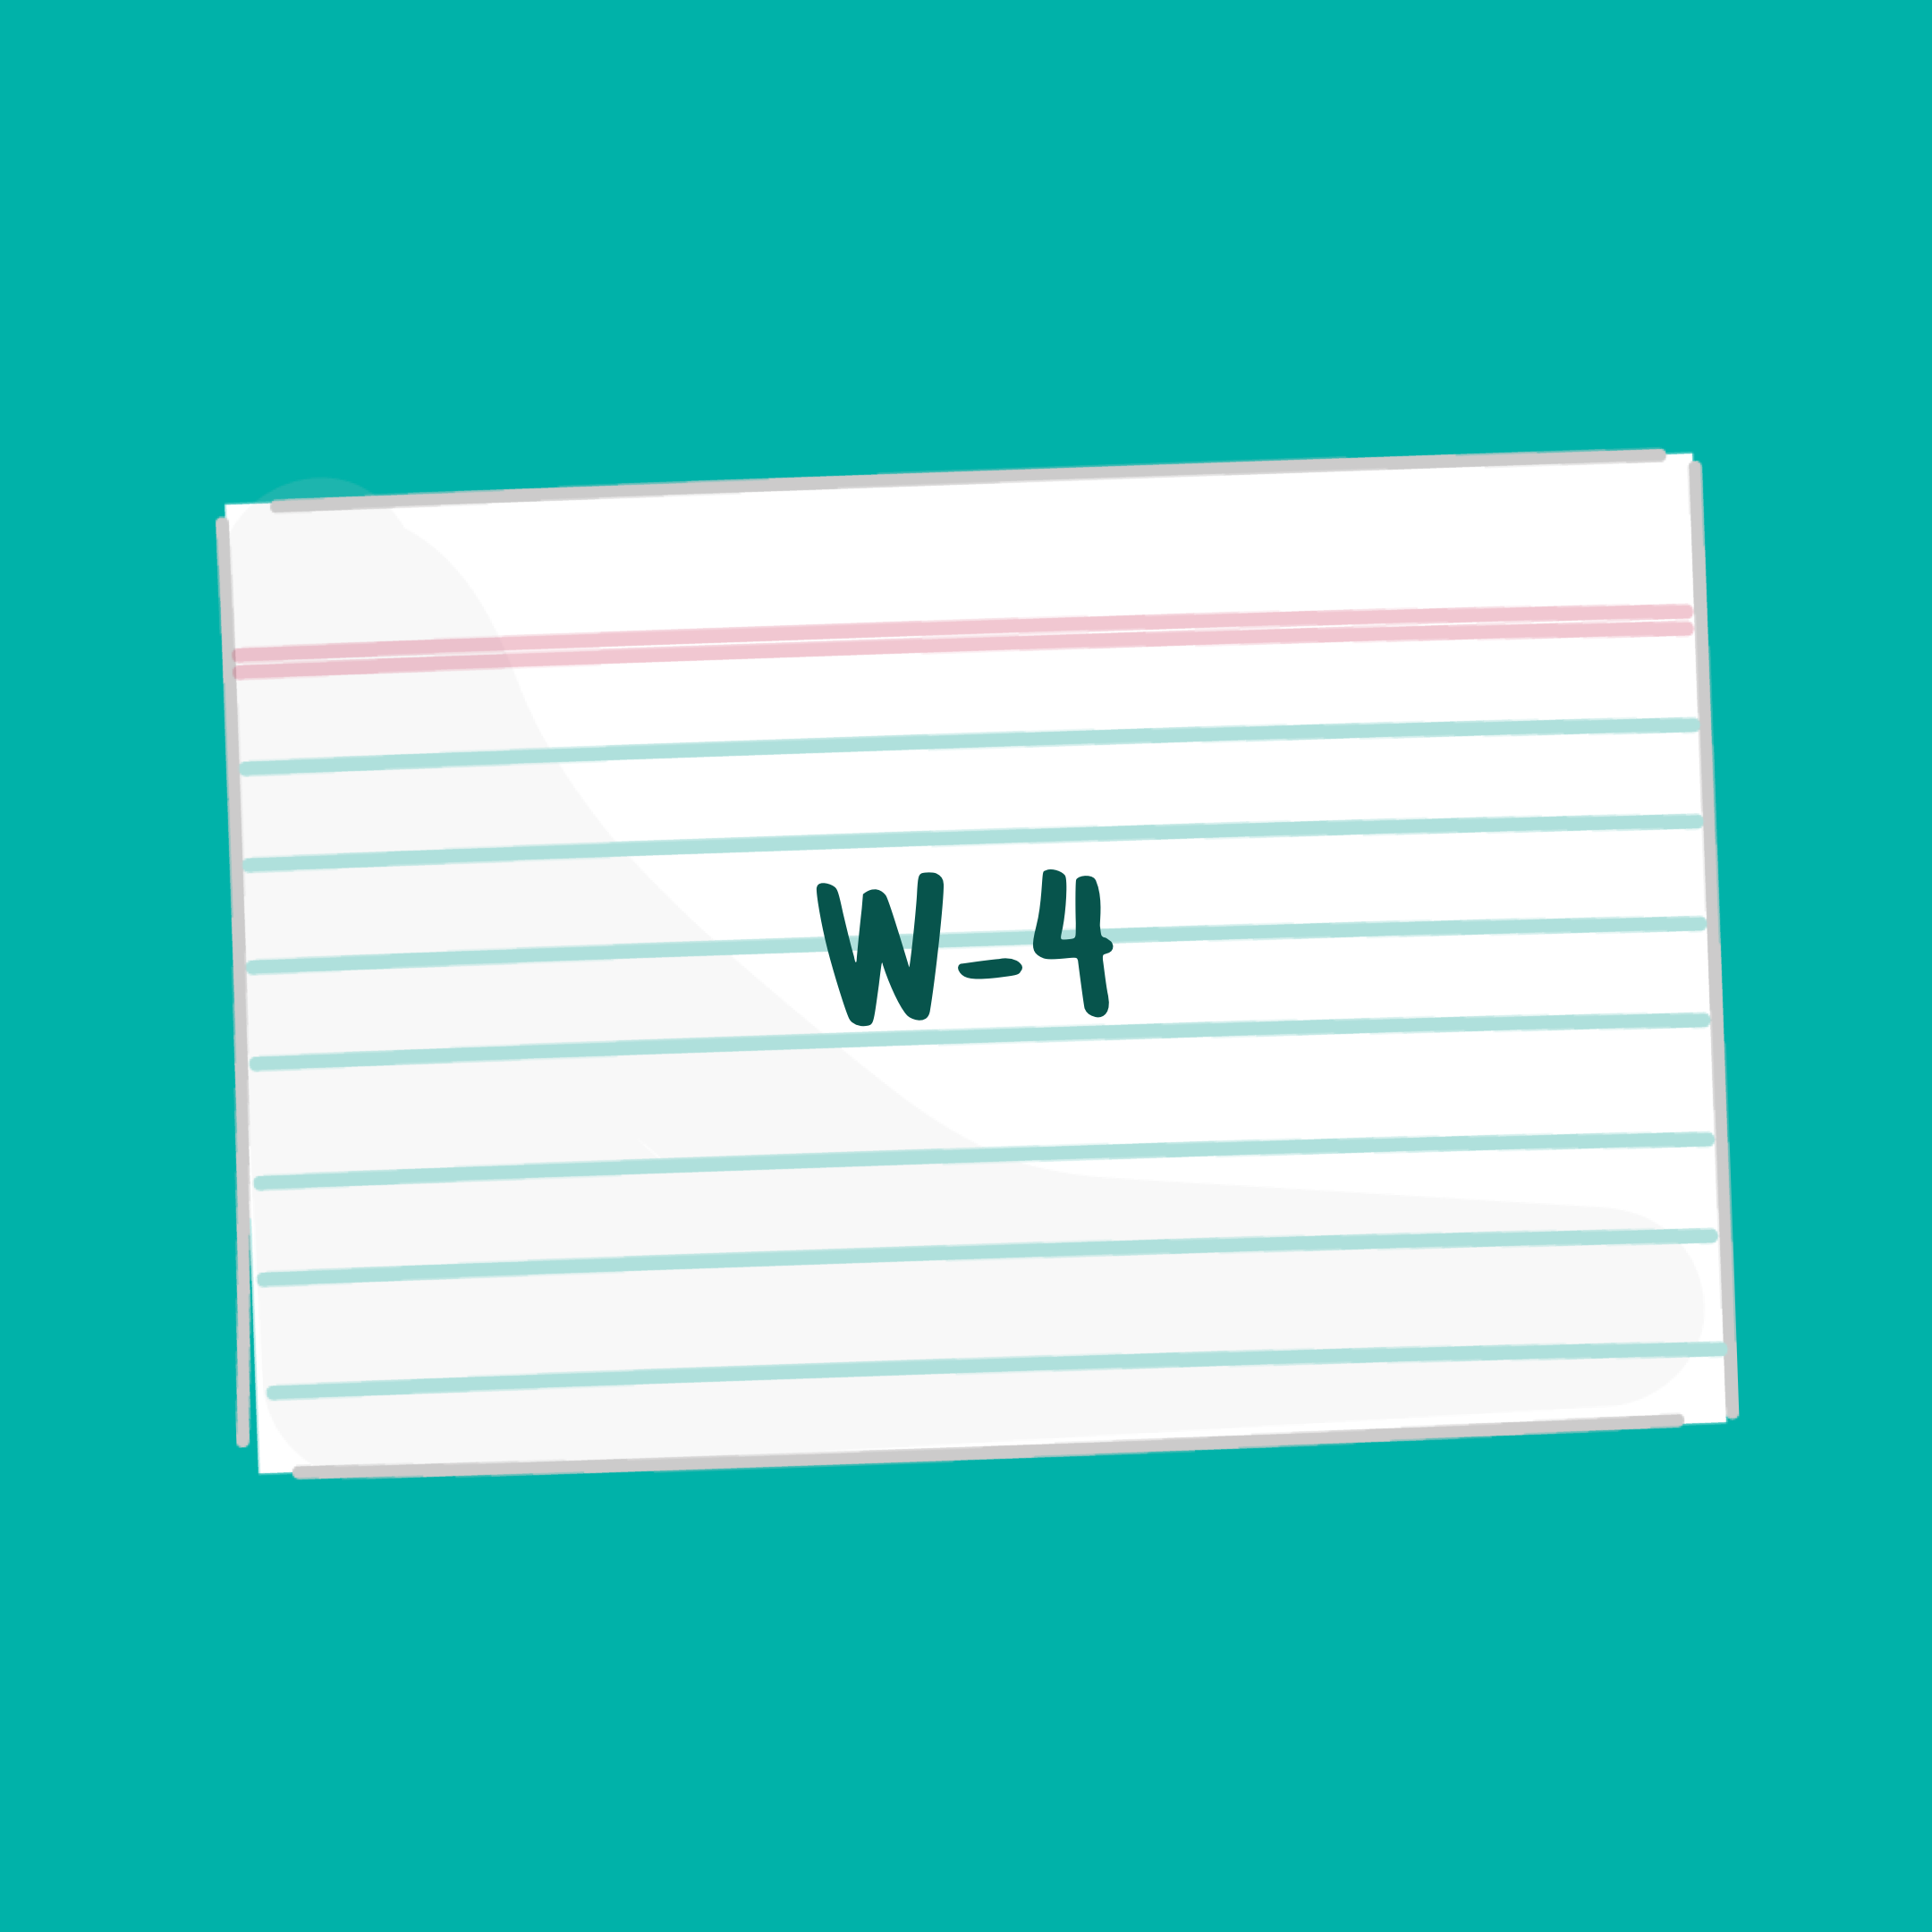 W-4 FSL card